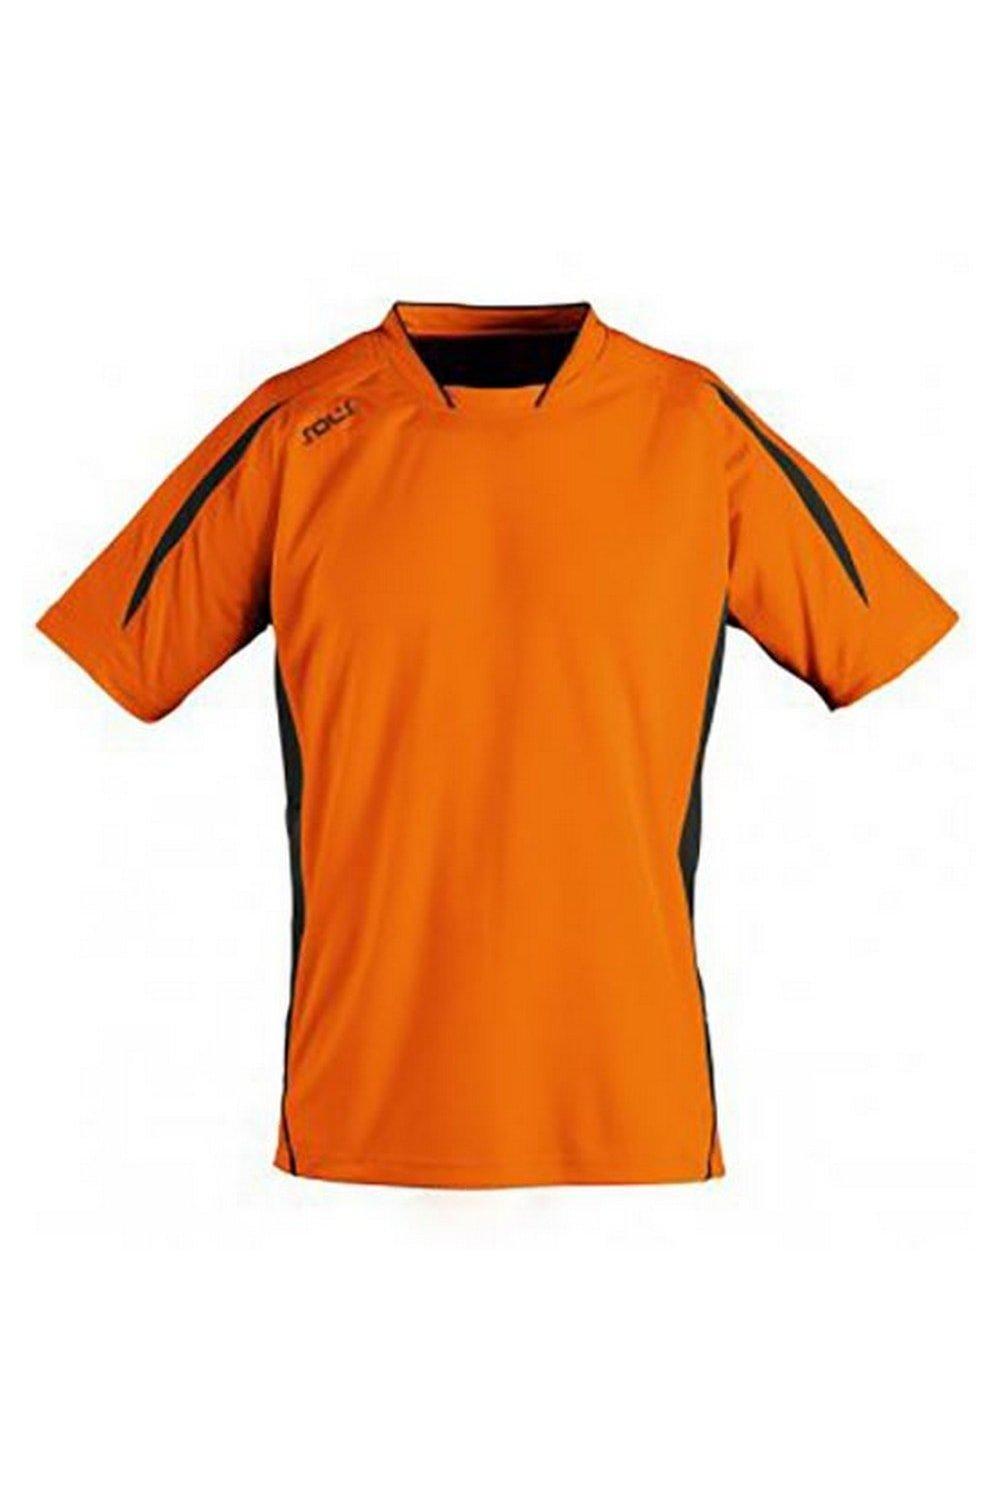 maracana 2 short sleeve football t-shirt